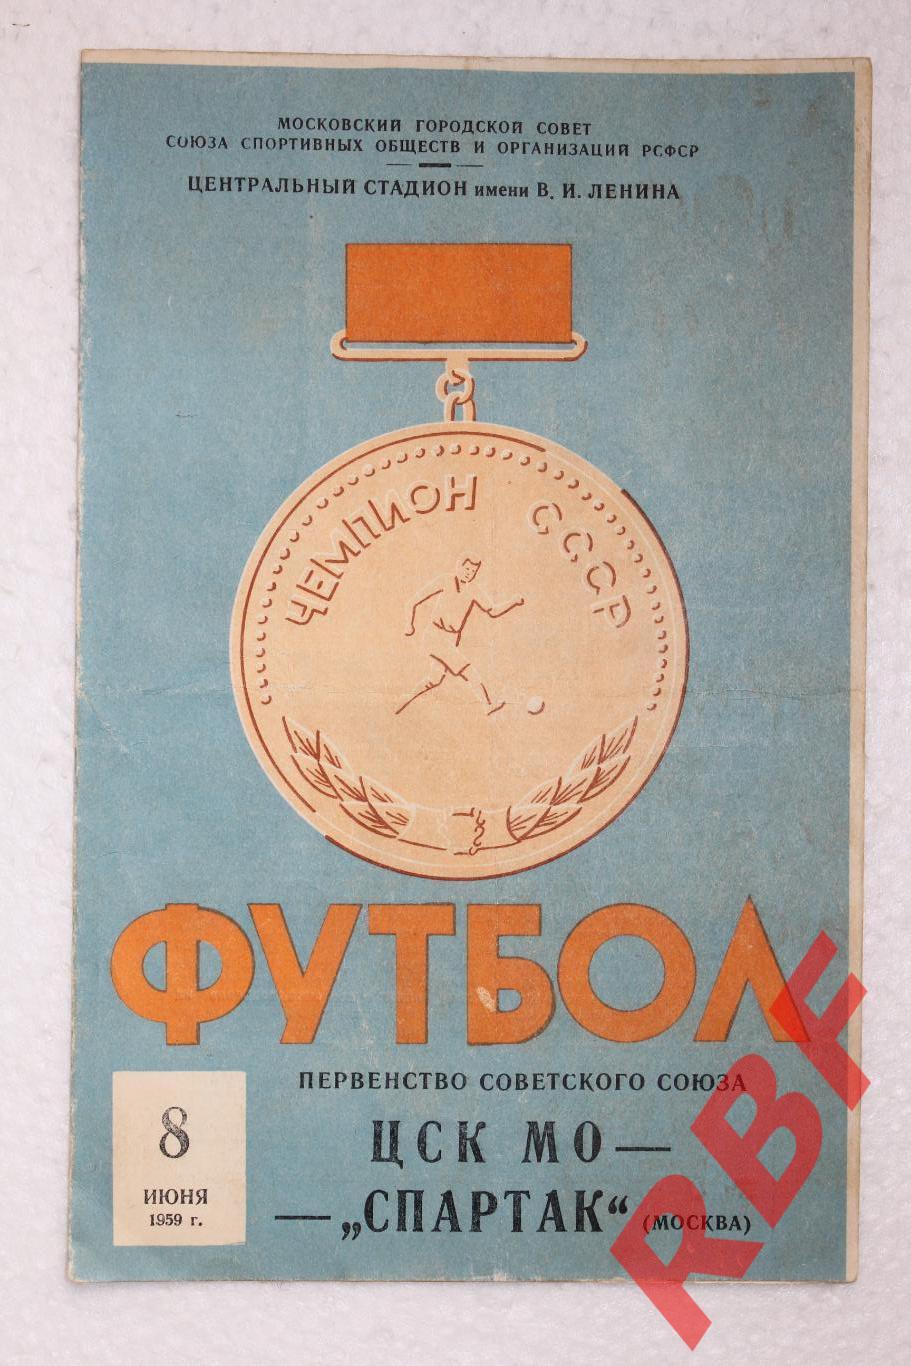 ЦСК МО - Спартак,8 июня 1959